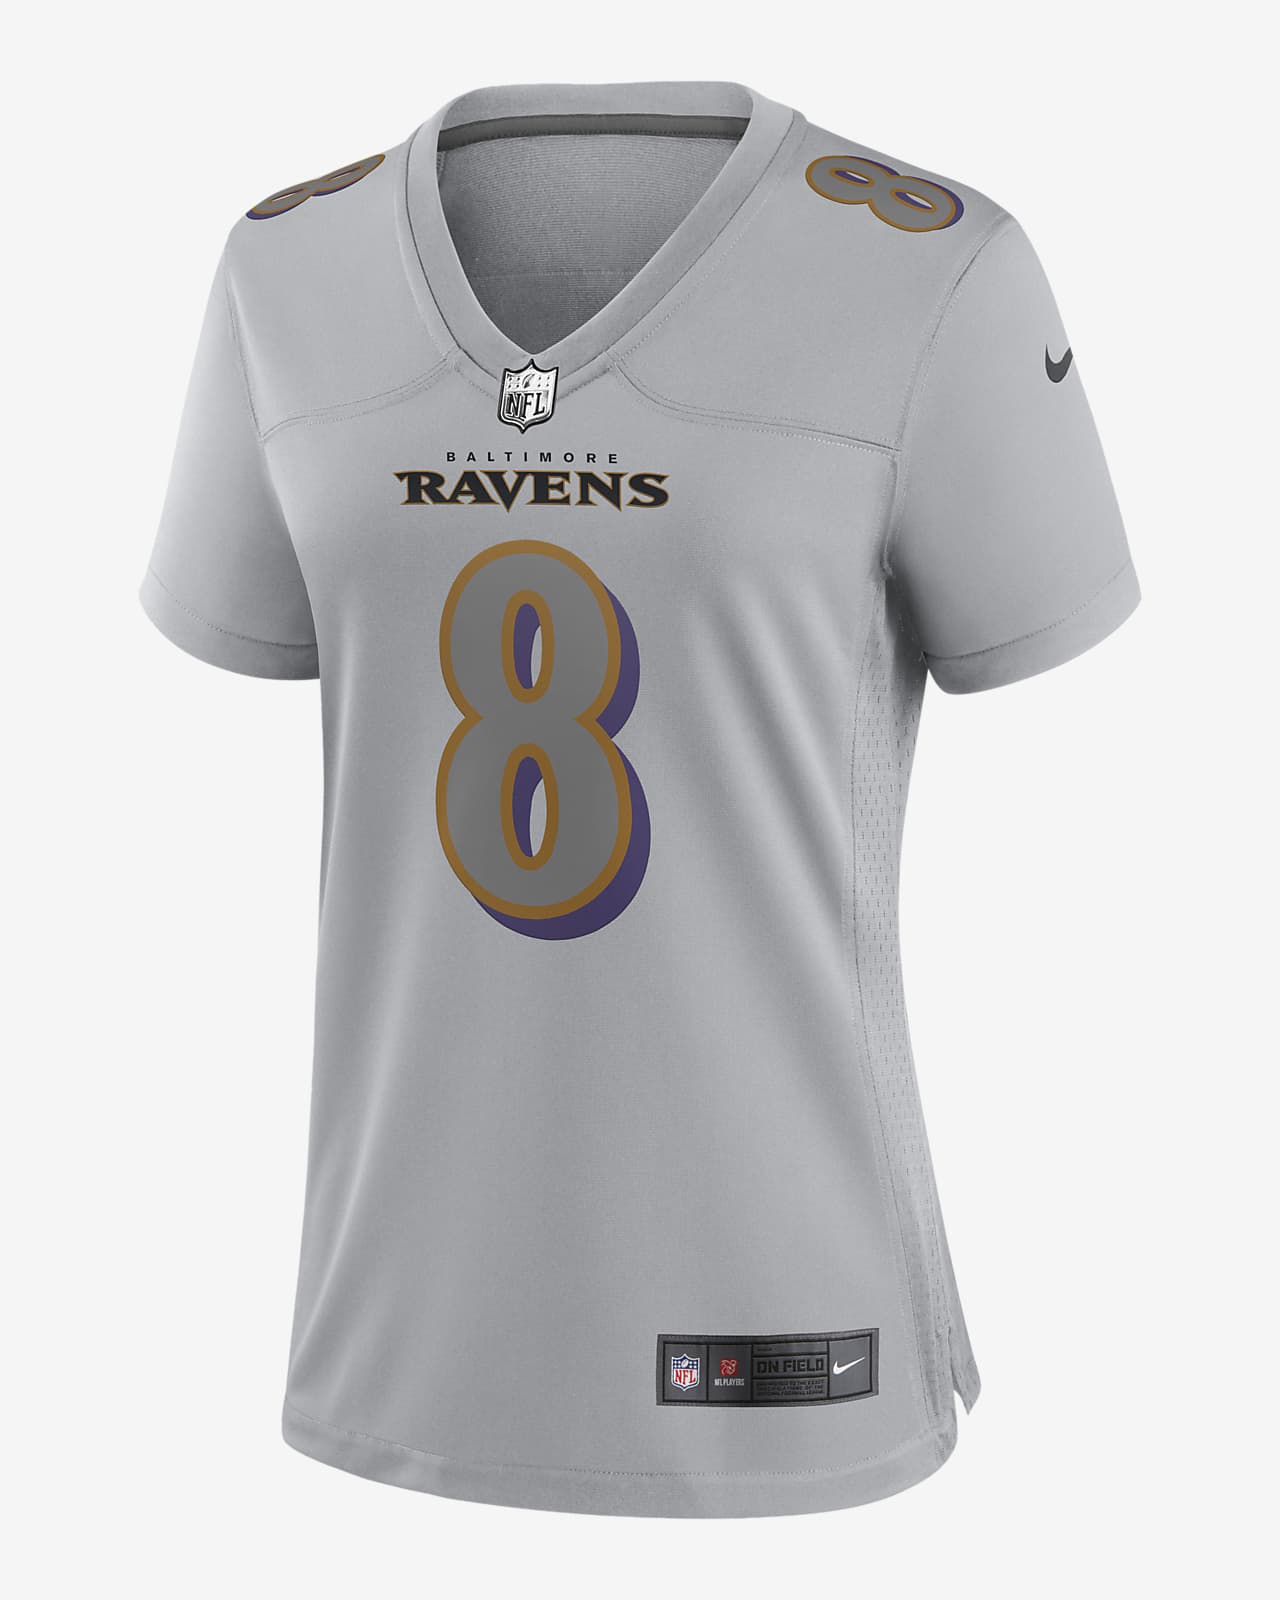 NFL Baltimore Ravens Atmosphere (Lamar Jackson) Women's Fashion Football Jersey